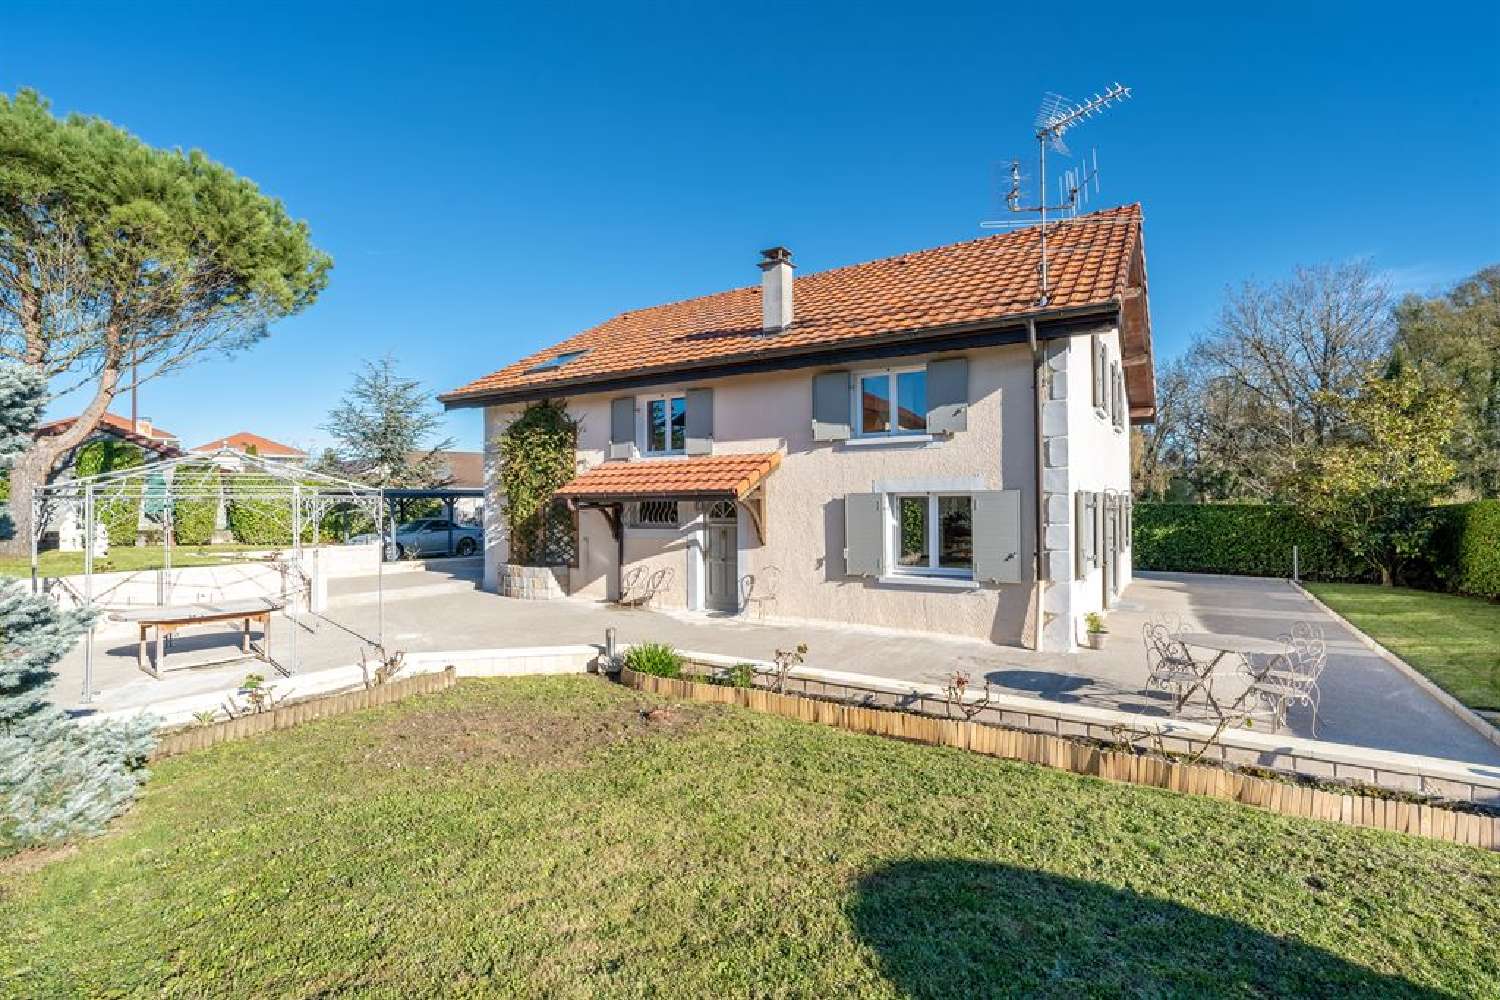  for sale villa Messery Haute-Savoie 4